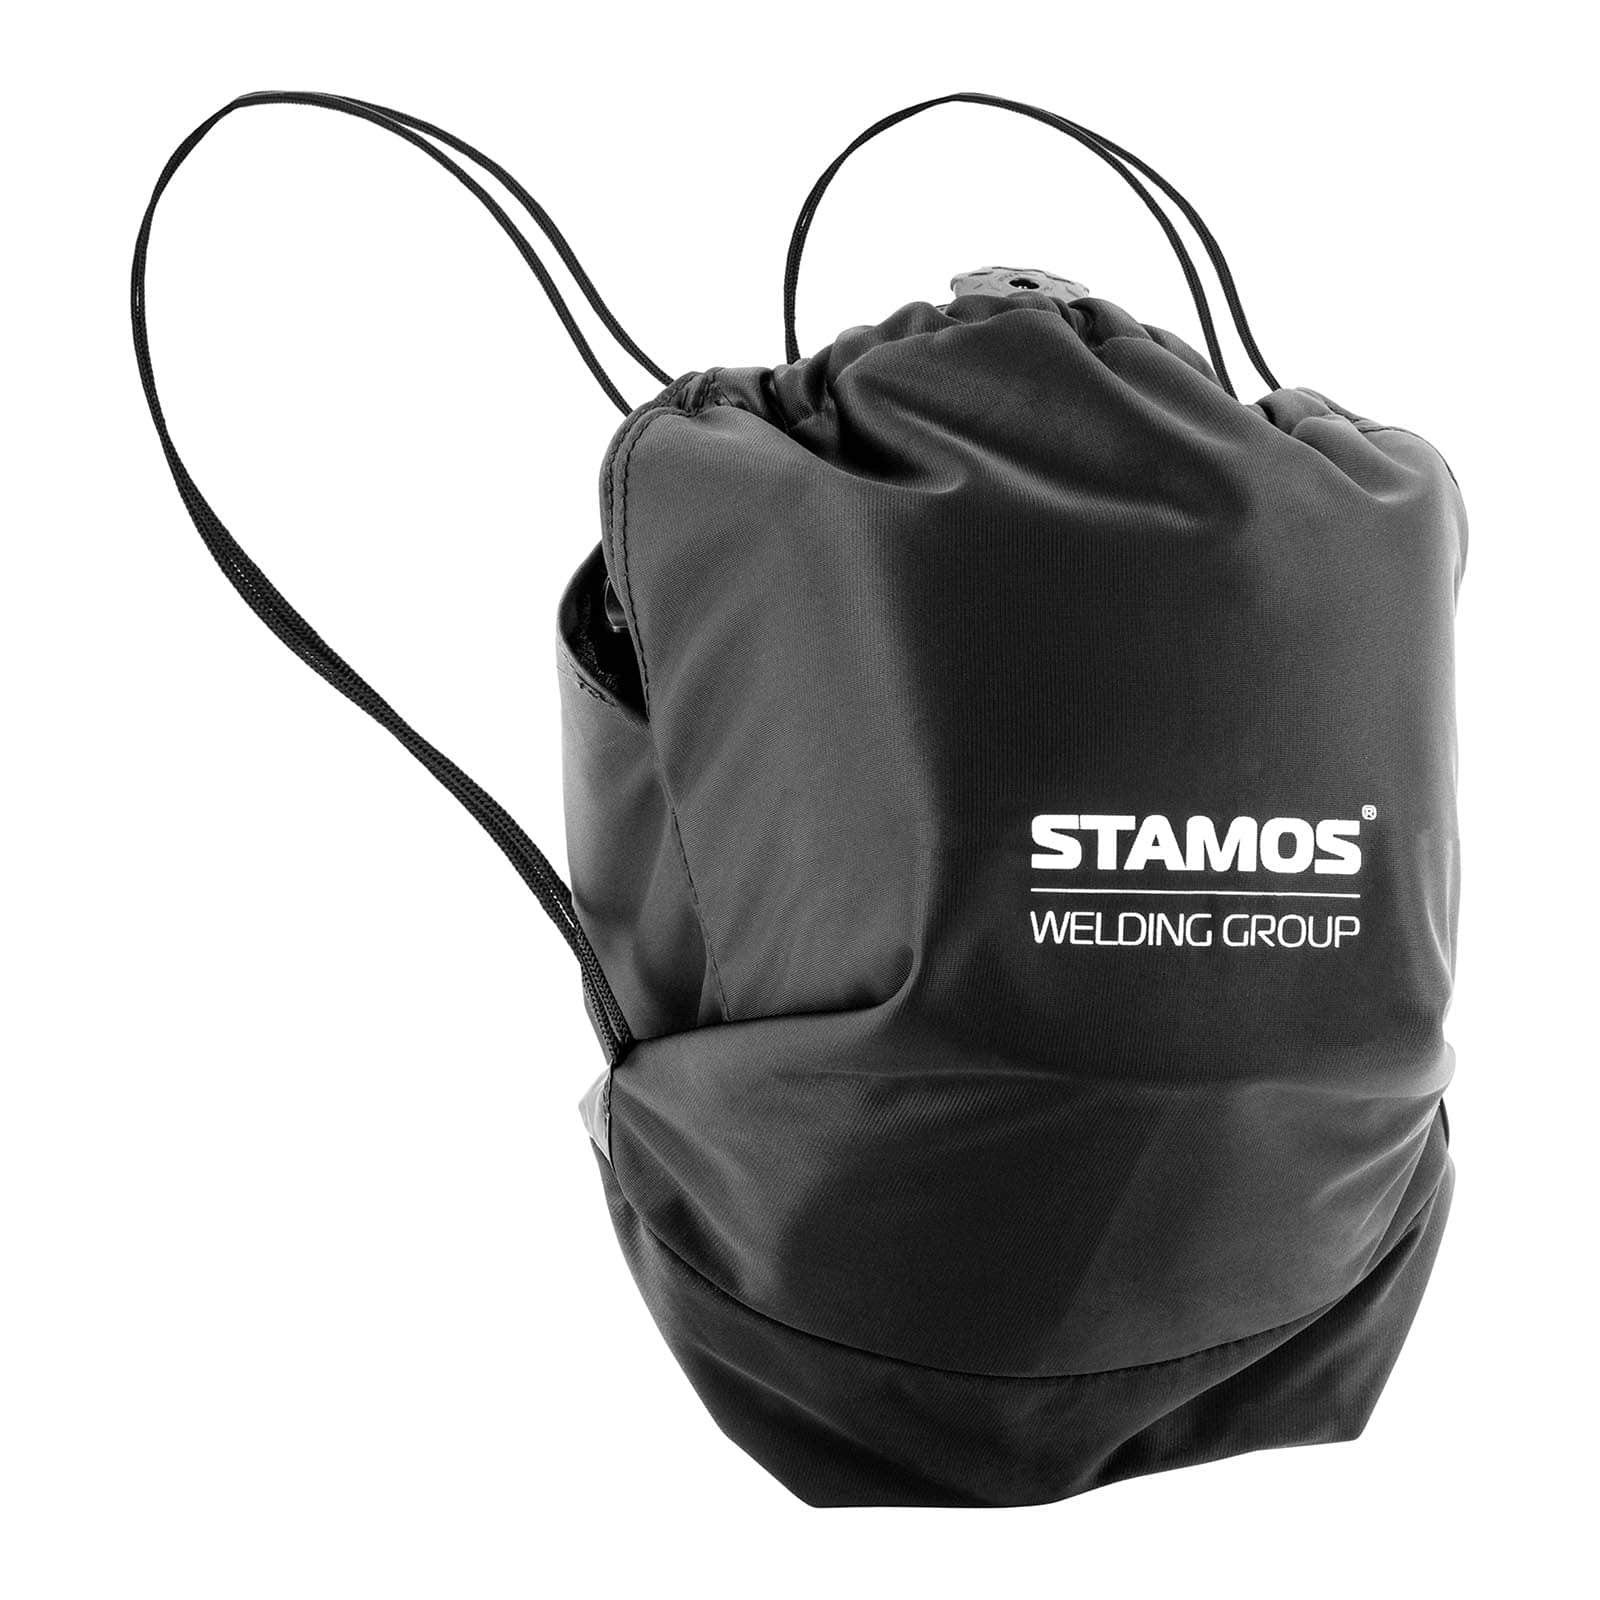 Schweißhelm Stamos Group Welding X-PROWELD Schweißhelm Schweißerhelm automatischer Schweißhelm